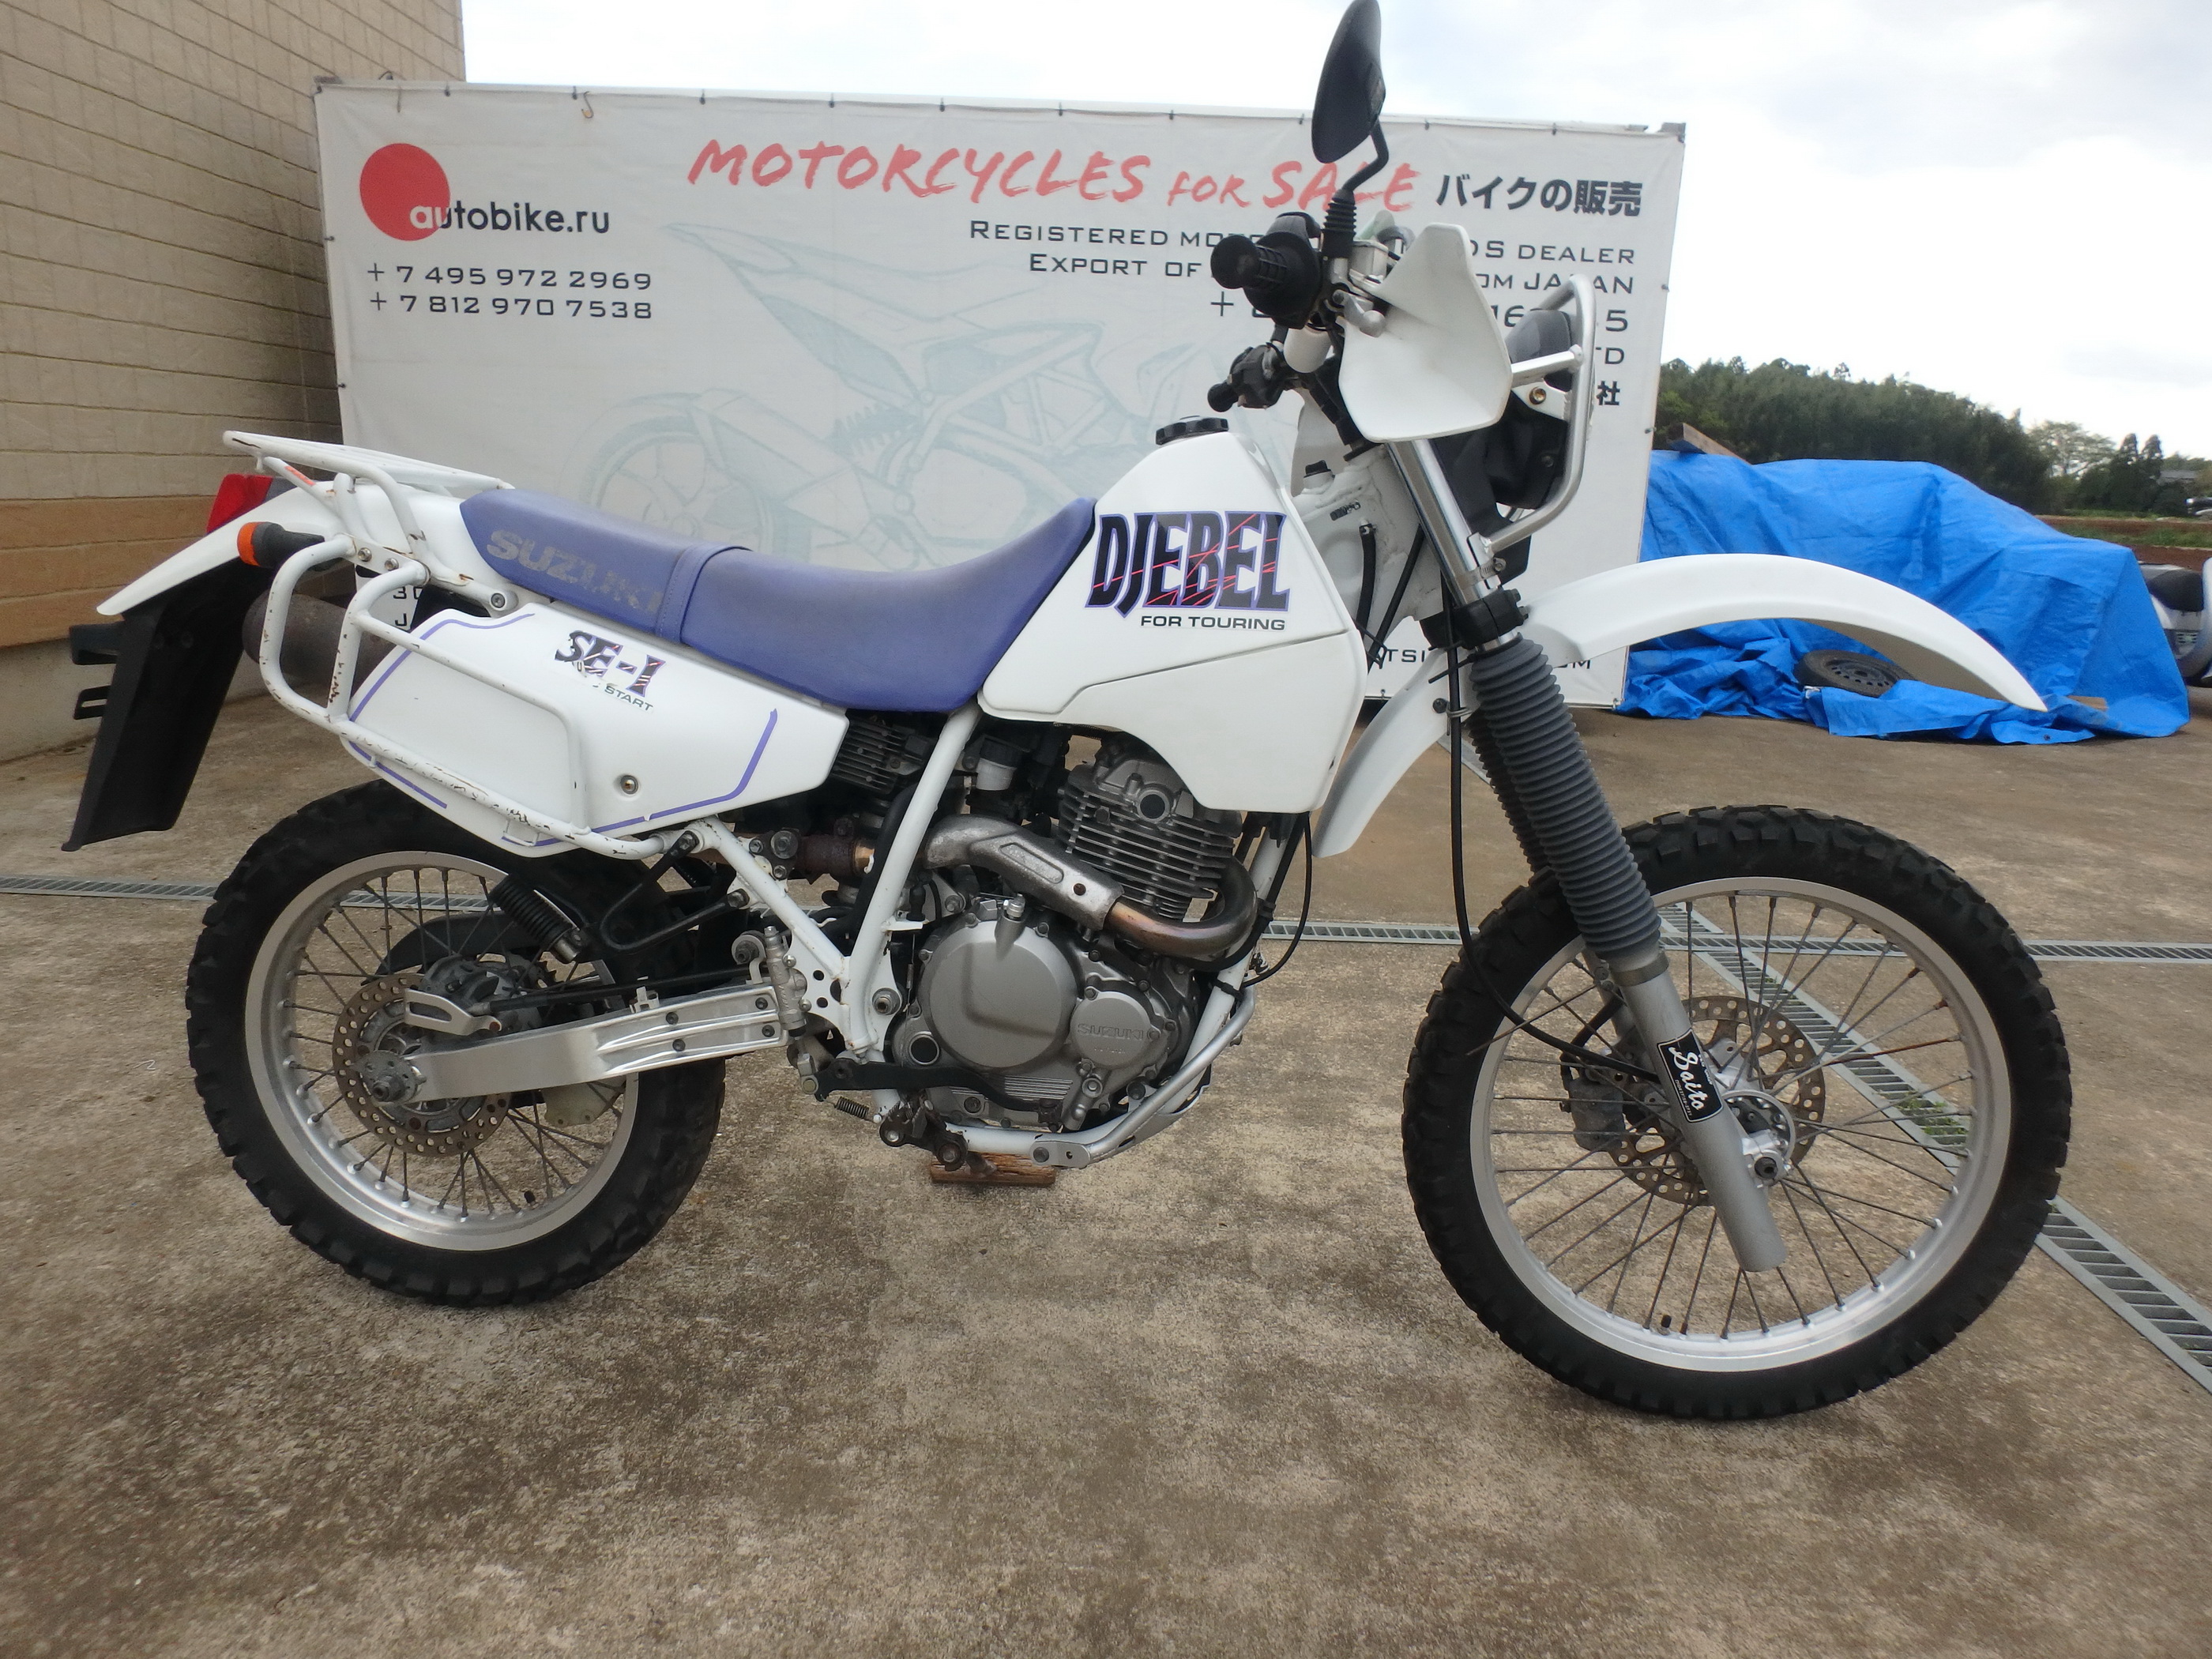 Купить мотоцикл Suzuki DR250 Djebel250 1993 фото 8